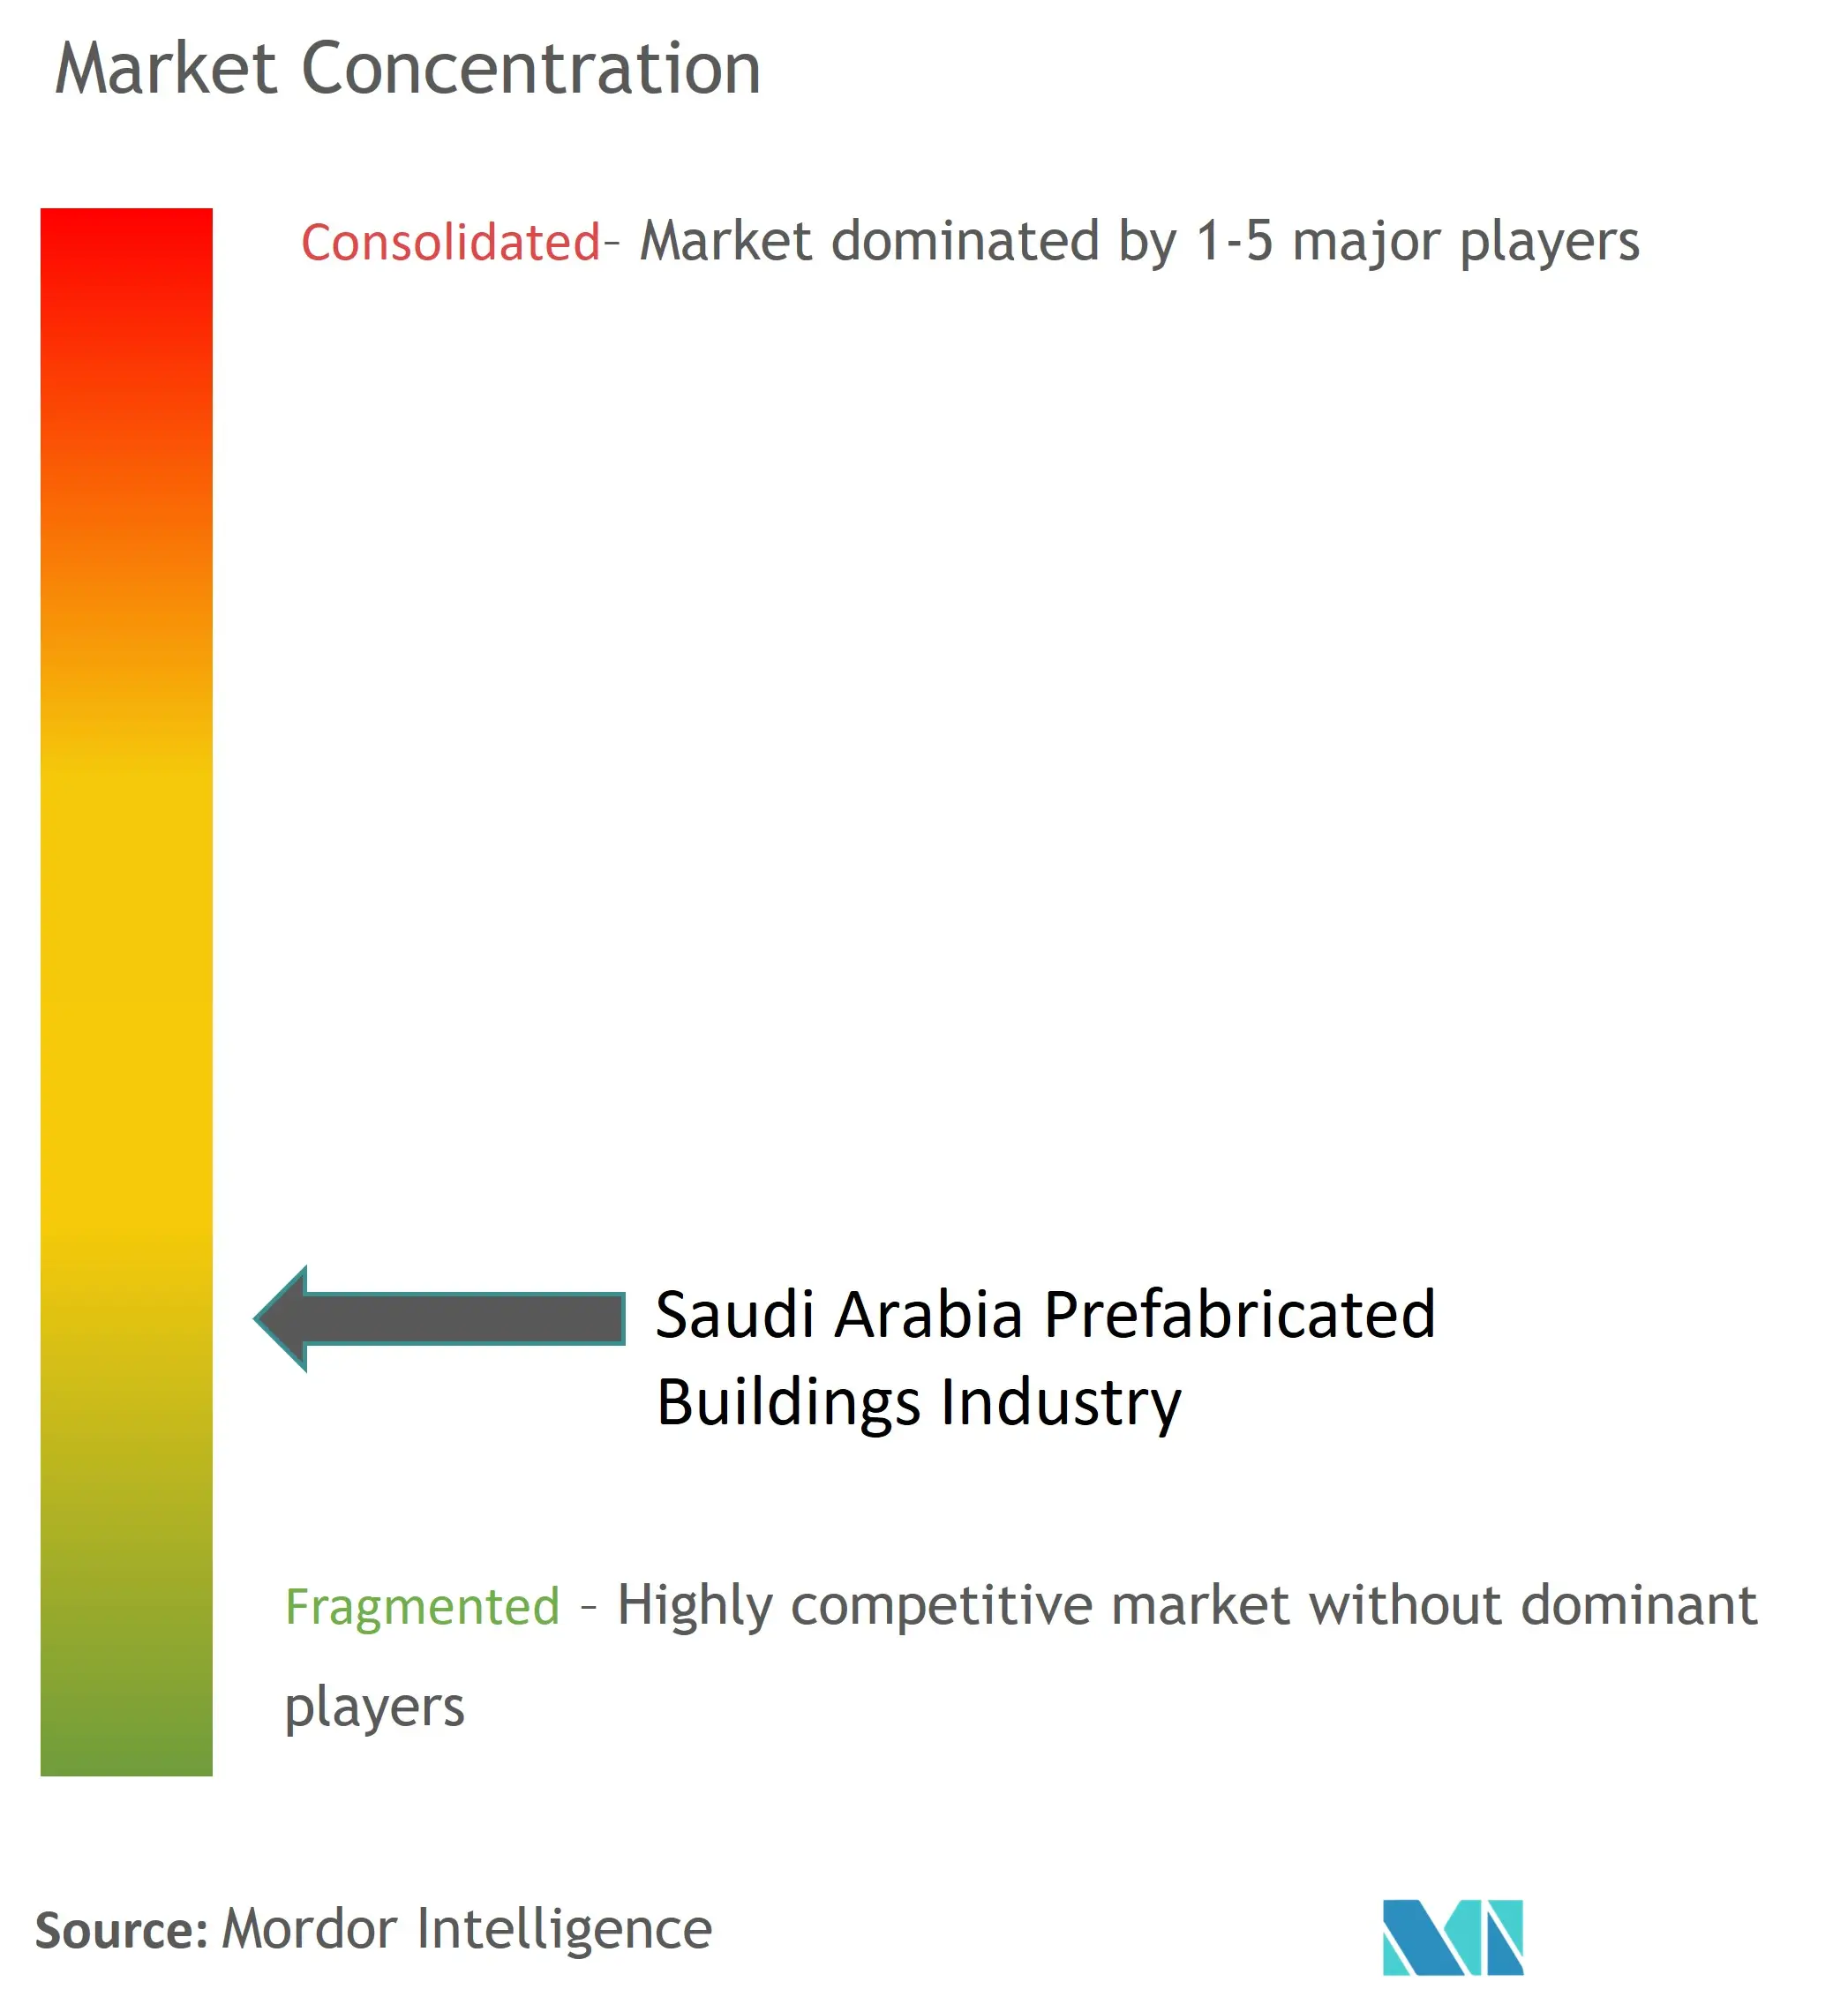 Saudi Arabia Prefabricated Buildings Market Concentration